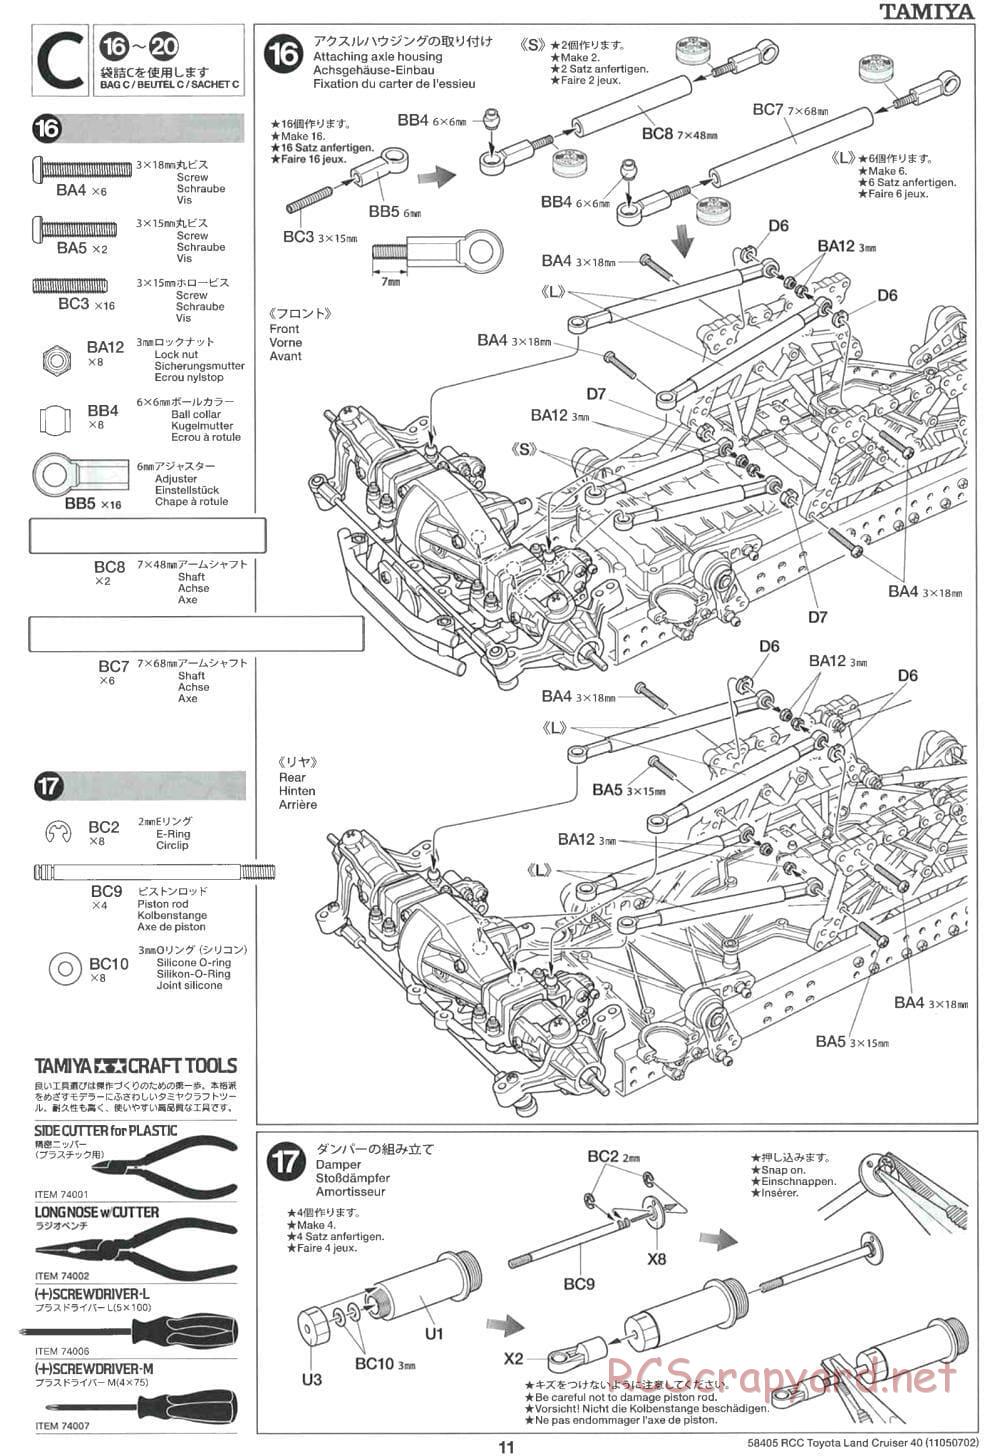 Tamiya - Toyota Land Cruiser 40 - CR-01 Chassis - Manual - Page 11